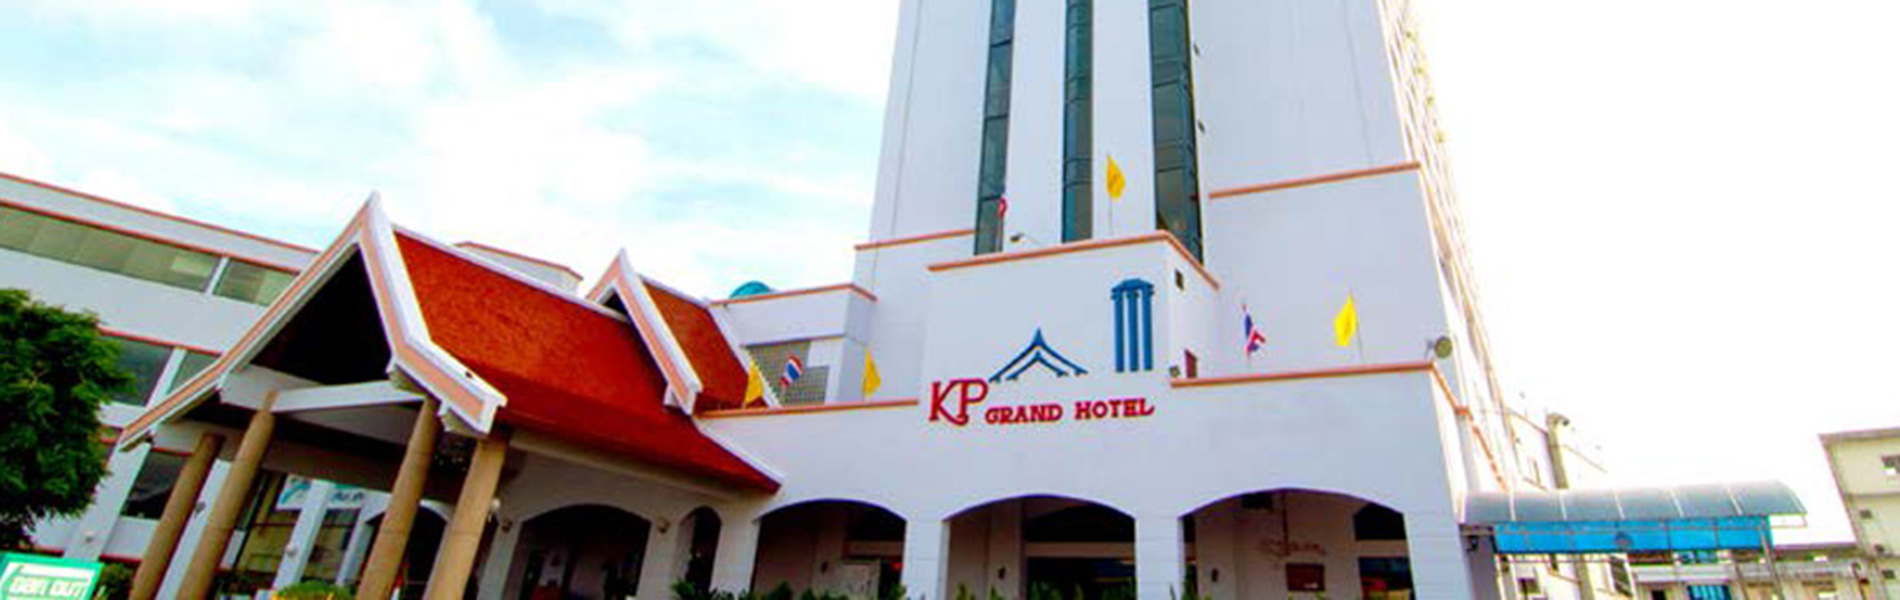 KP GRAND HOTEL CHANTHABURI